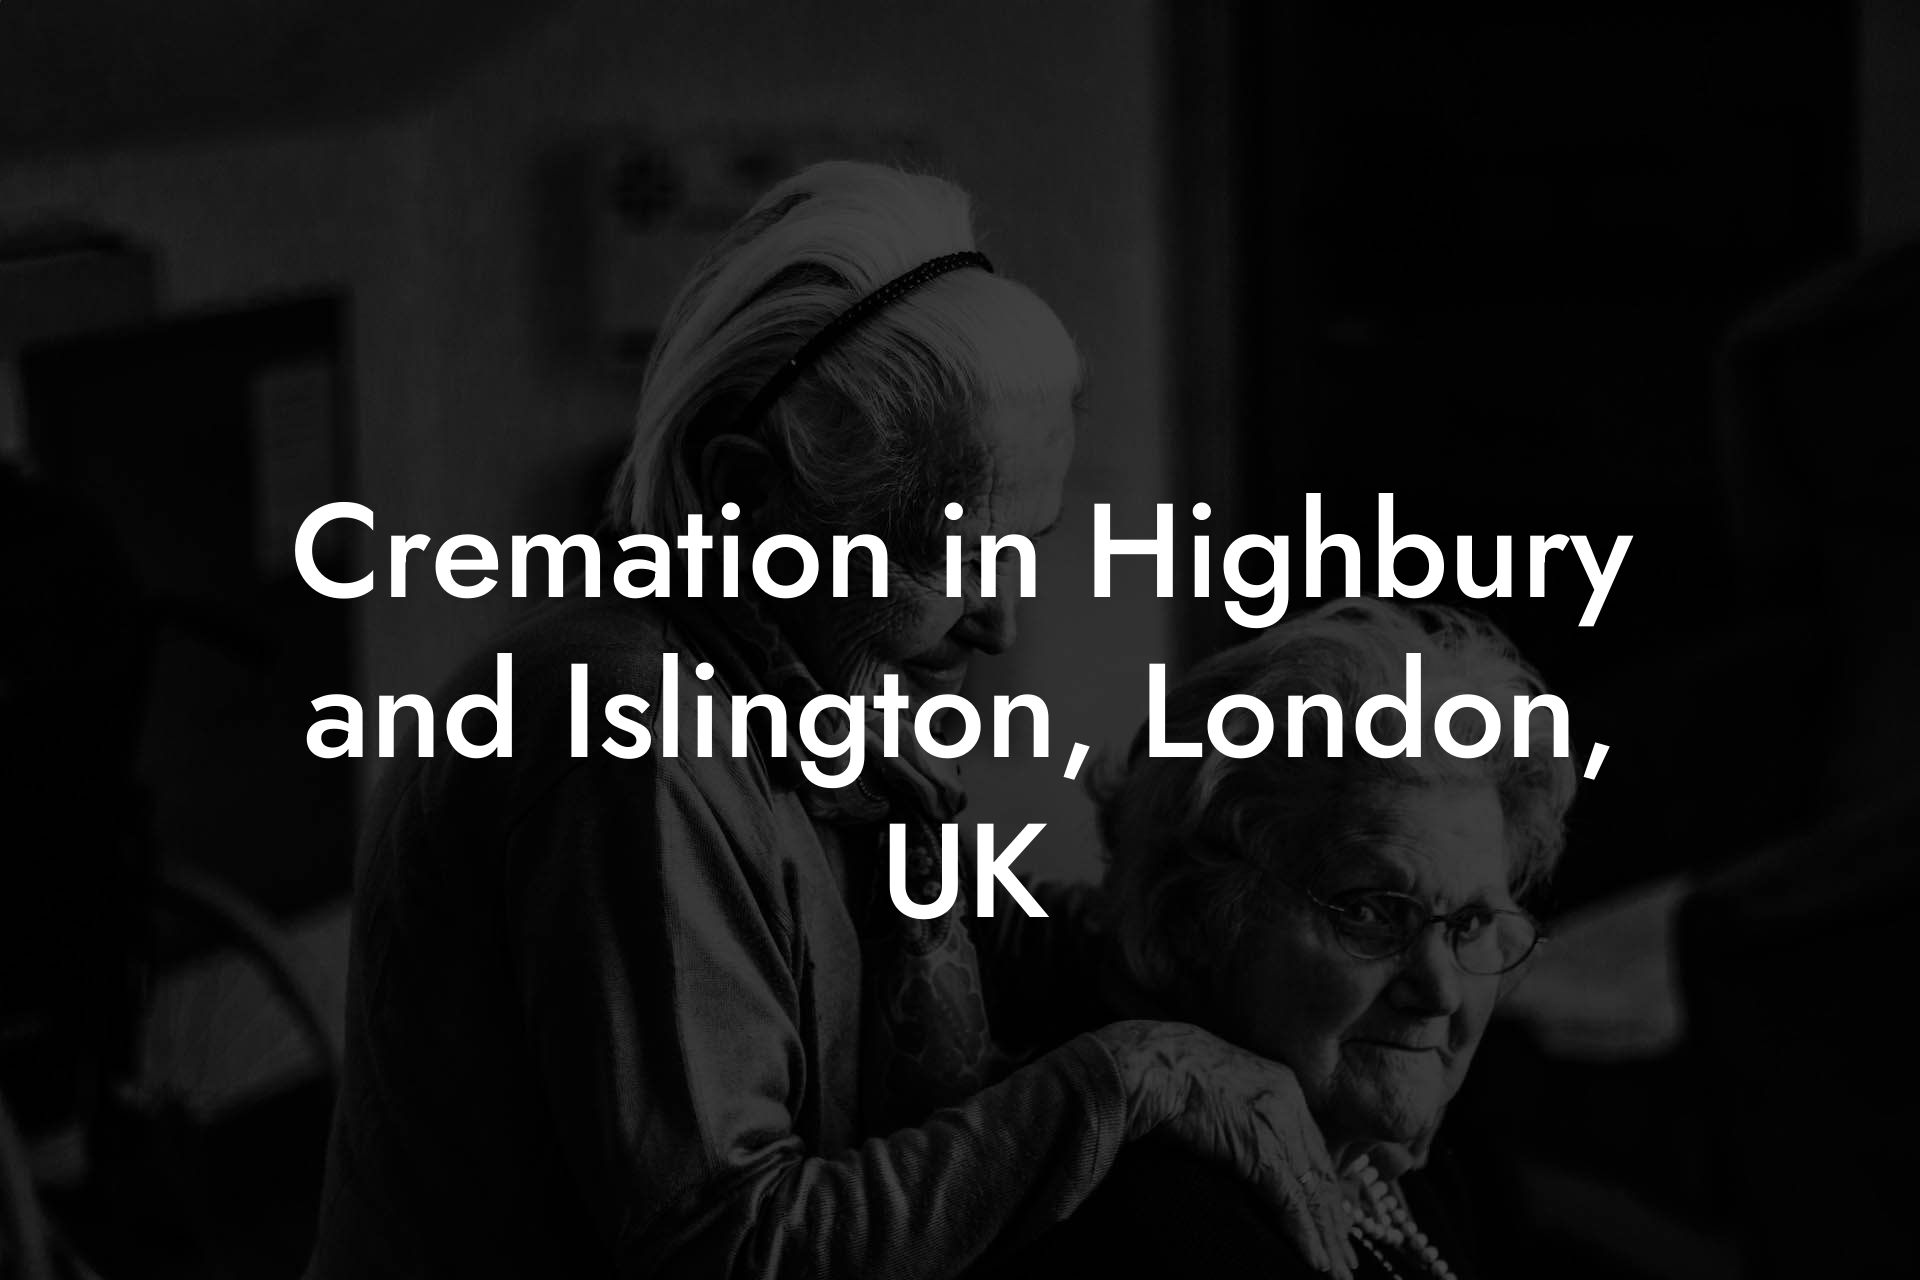 Cremation in Highbury and Islington, London, UK